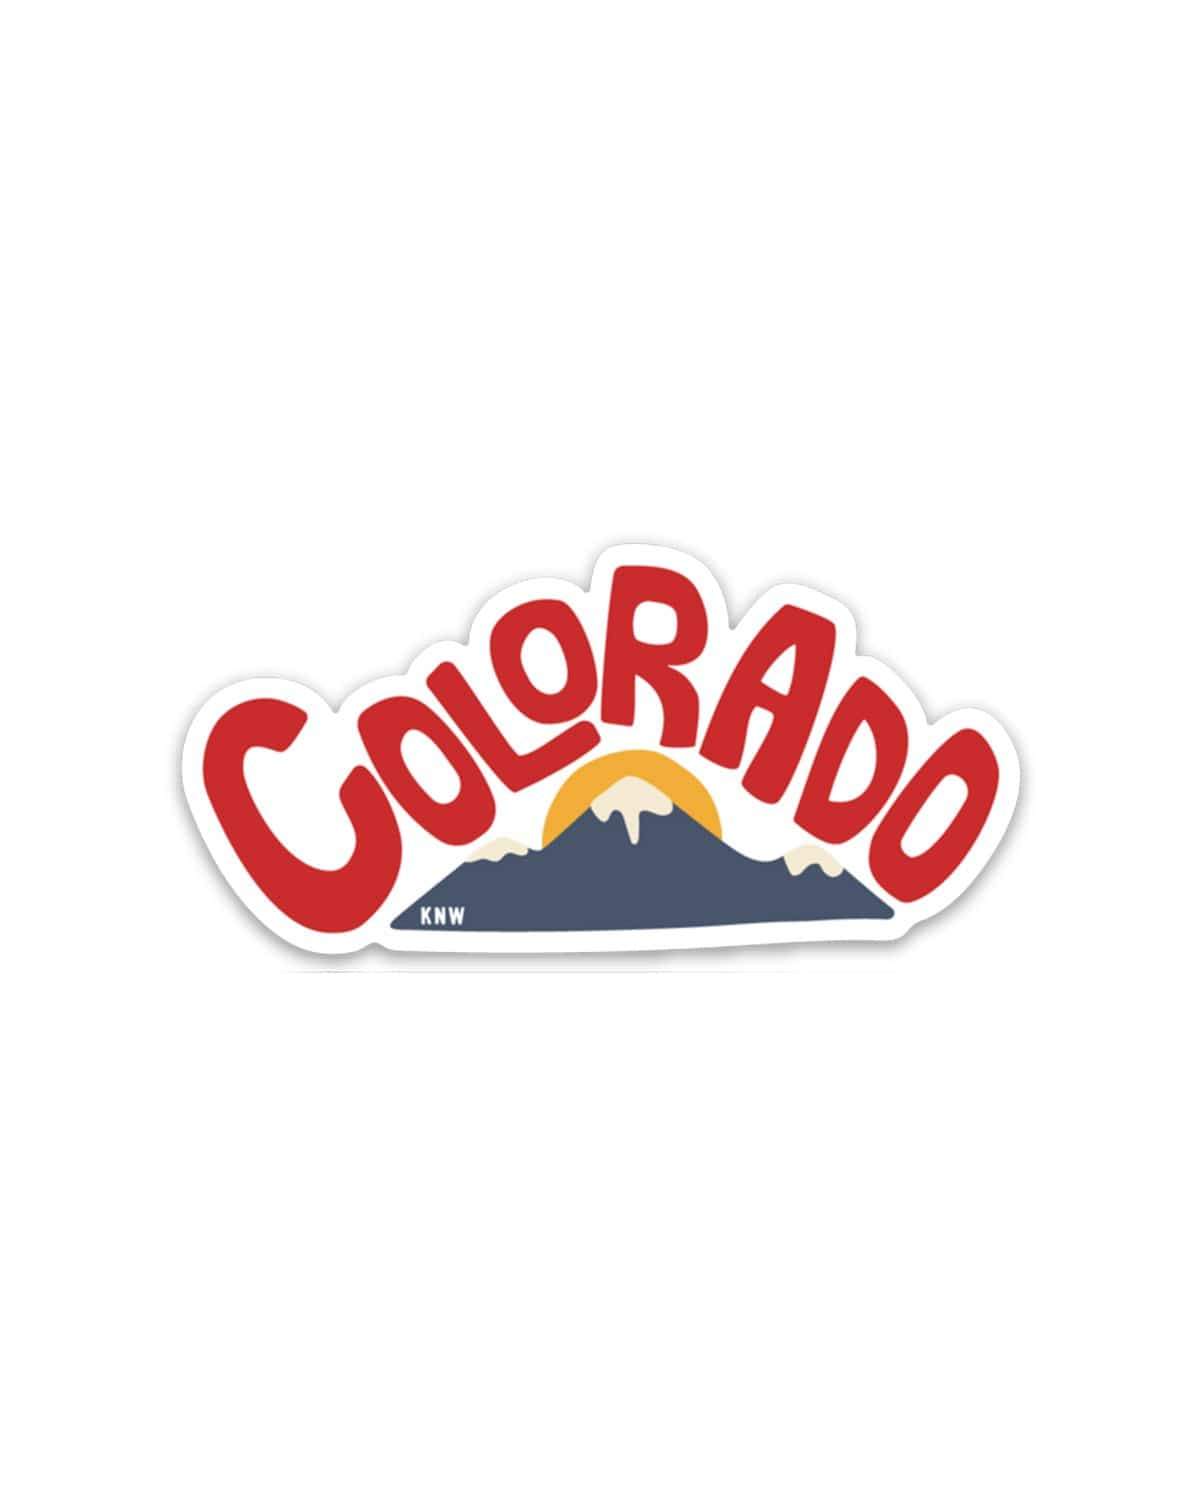 Colorado Landscape | Sticker - Keep Nature Wild